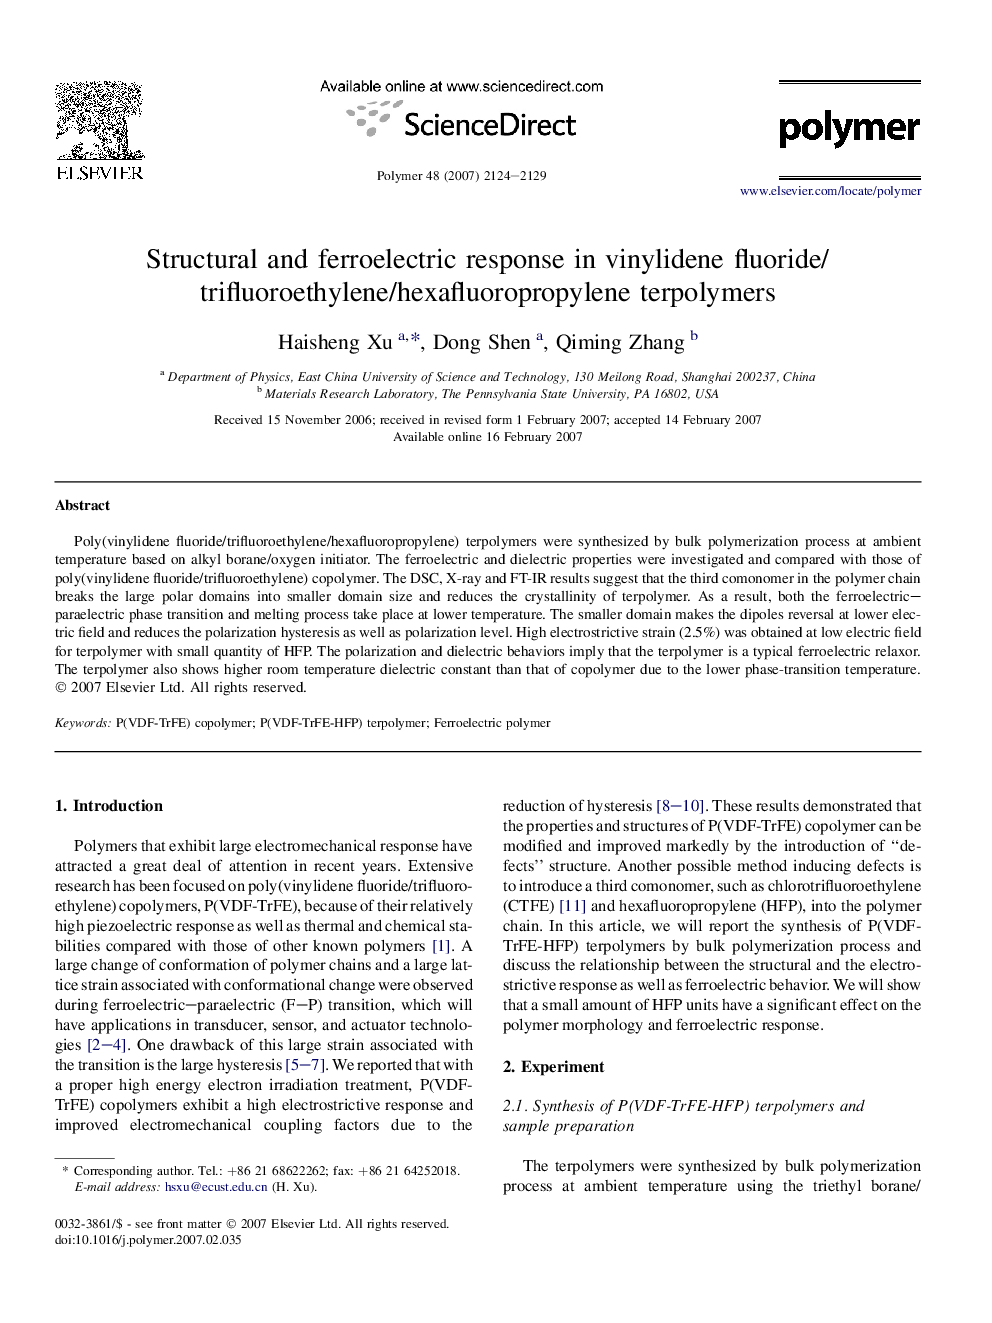 Structural and ferroelectric response in vinylidene fluoride/trifluoroethylene/hexafluoropropylene terpolymers